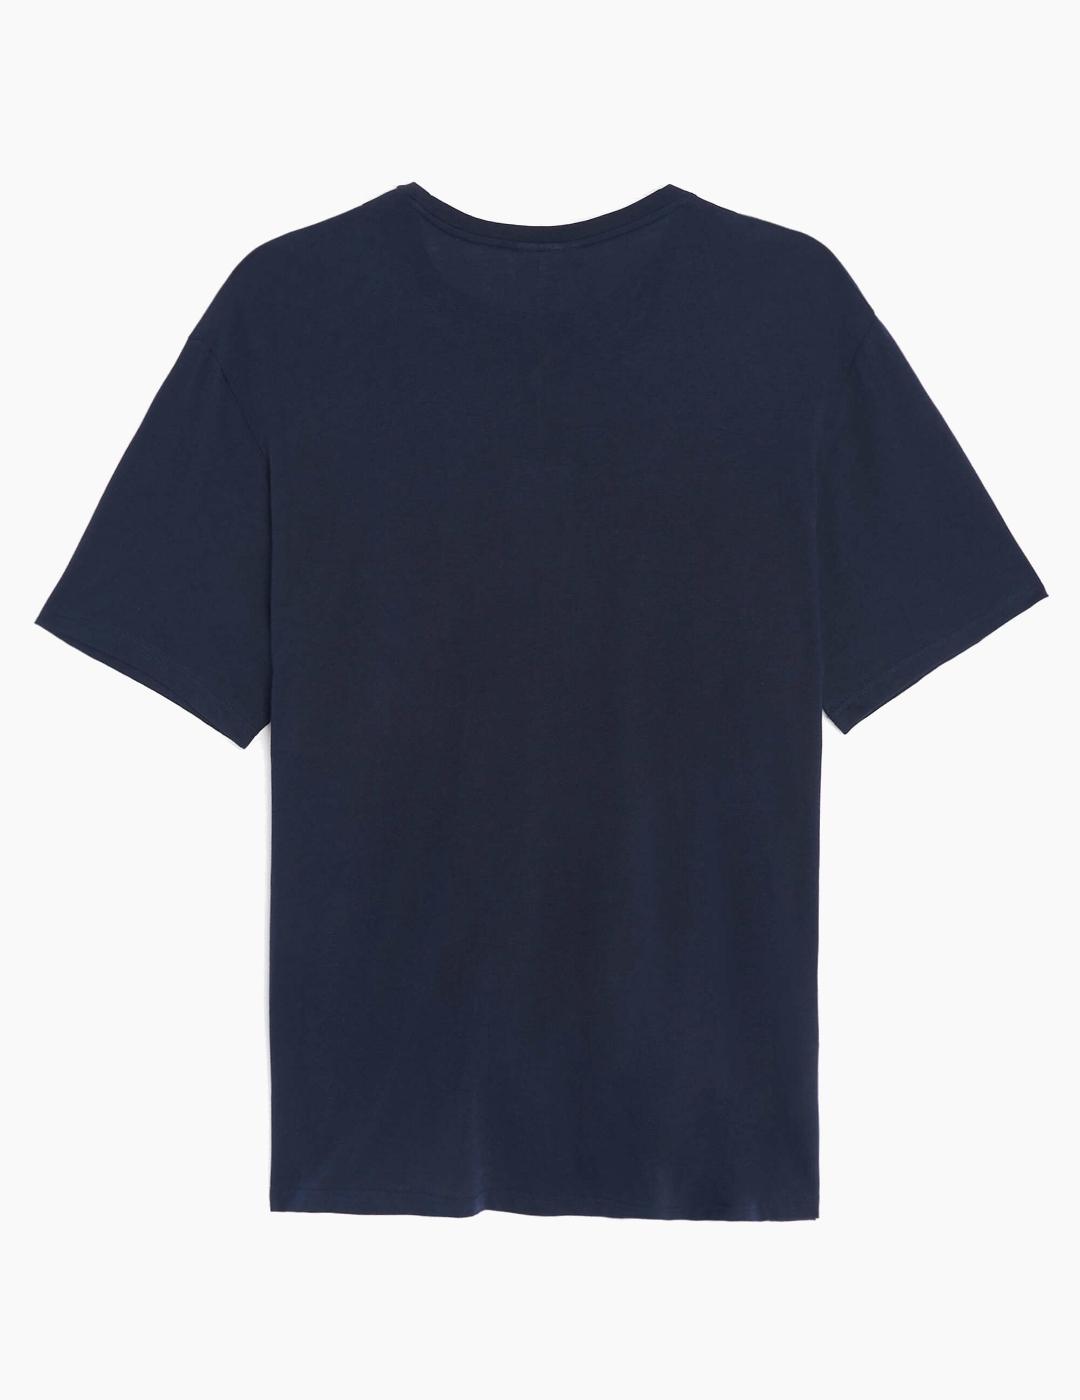 Camiseta Lacoste basica marino para hombre